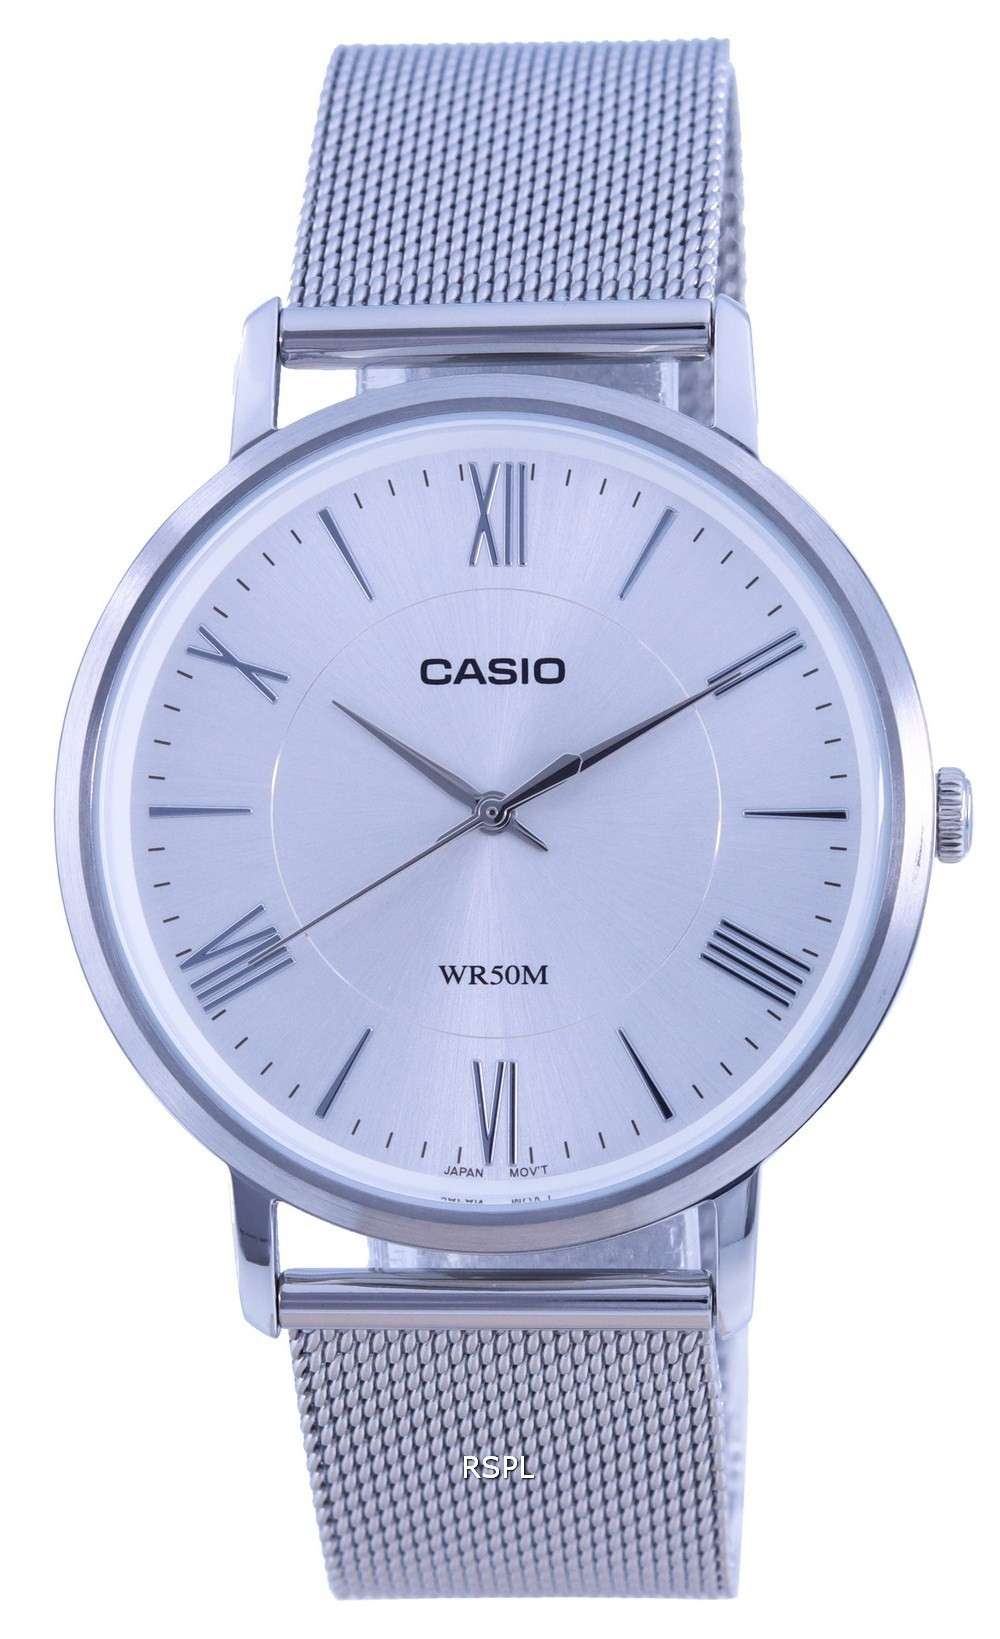 Reloj Casio analÃ³gico plateado de acero inoxidable de cuarzo MTP-B110M-7A MTPB110M-7 para hombre